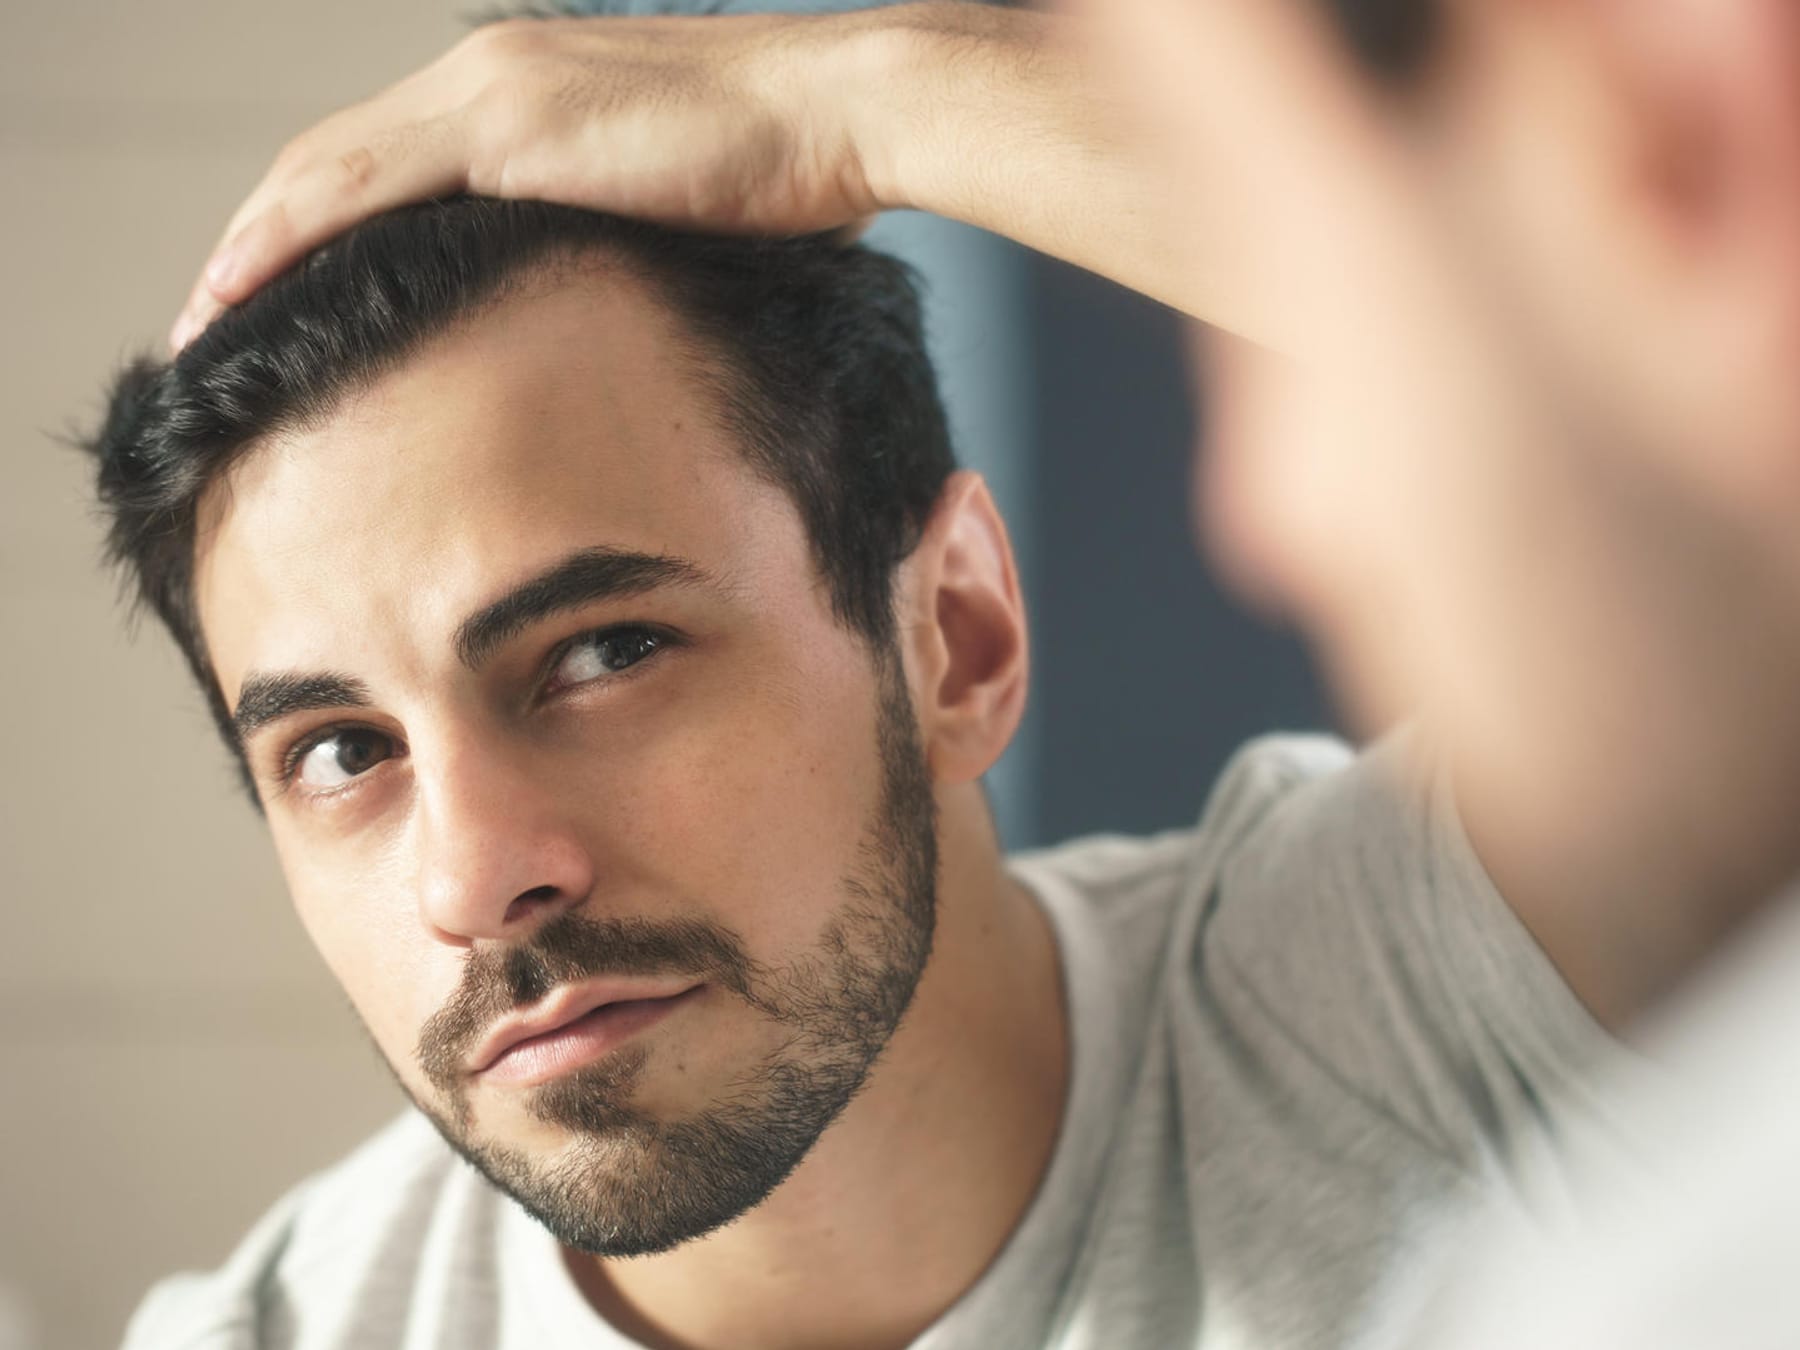 Haarausfall bei Männern stoppen: Welche Mittel helfen? Ursachen & Tipps